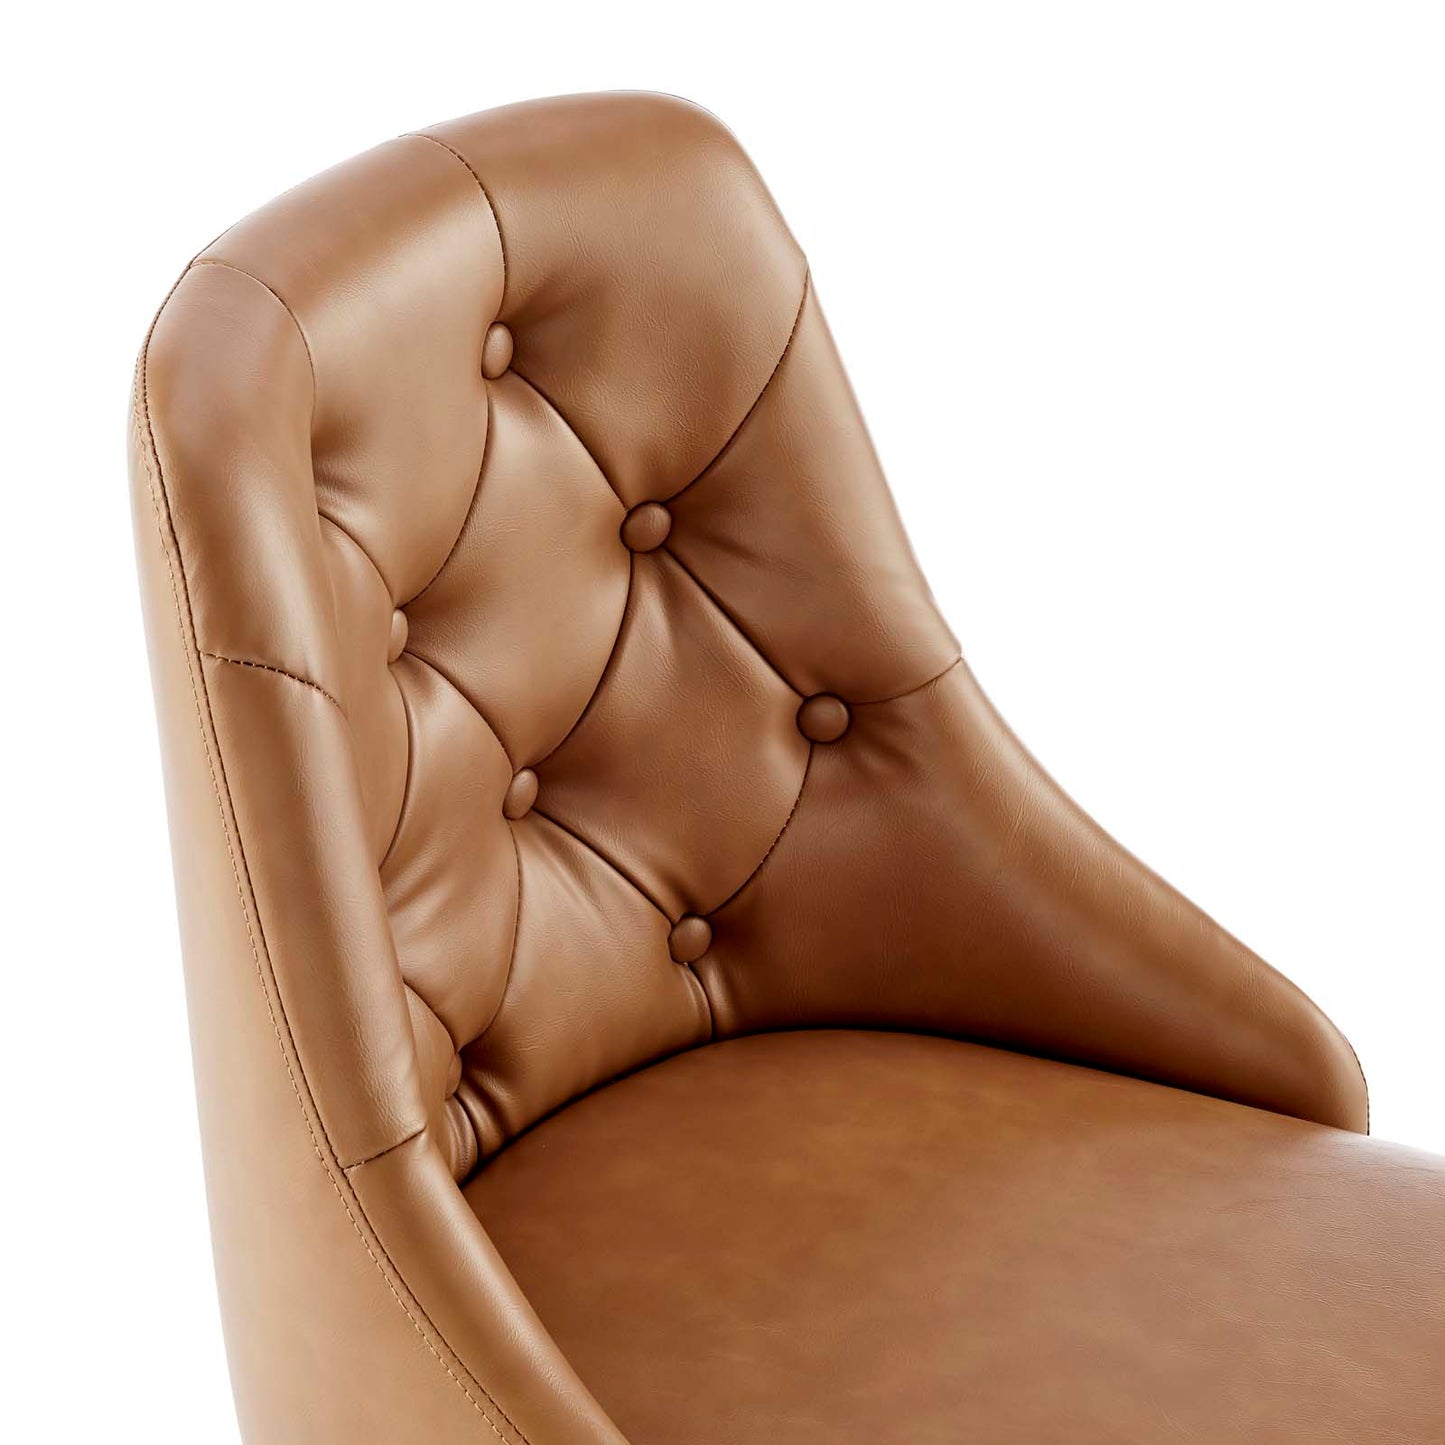 Distinct Tufted Swivel Vegan Leather Office Chair Black Tan EEI-4370-BLK-TAN